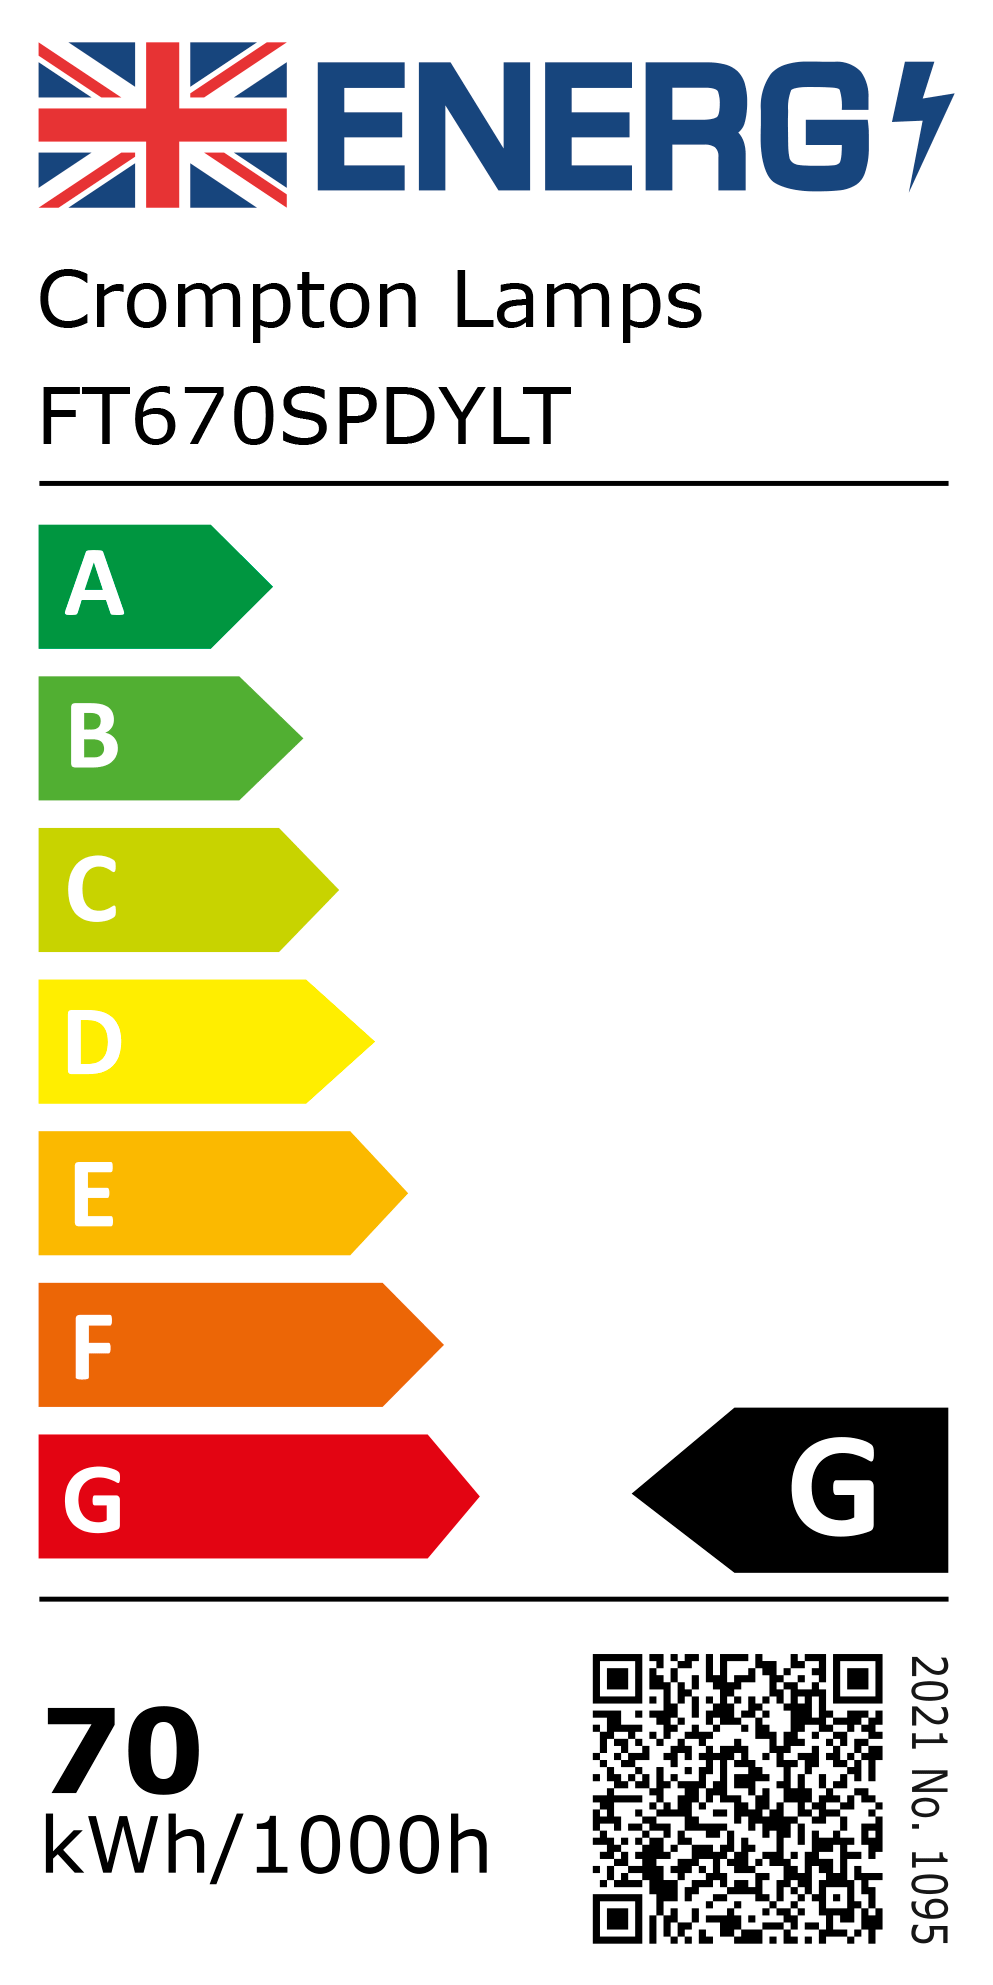 New 2021 Energy Rating Label: Stock Code FT670SPDYLT